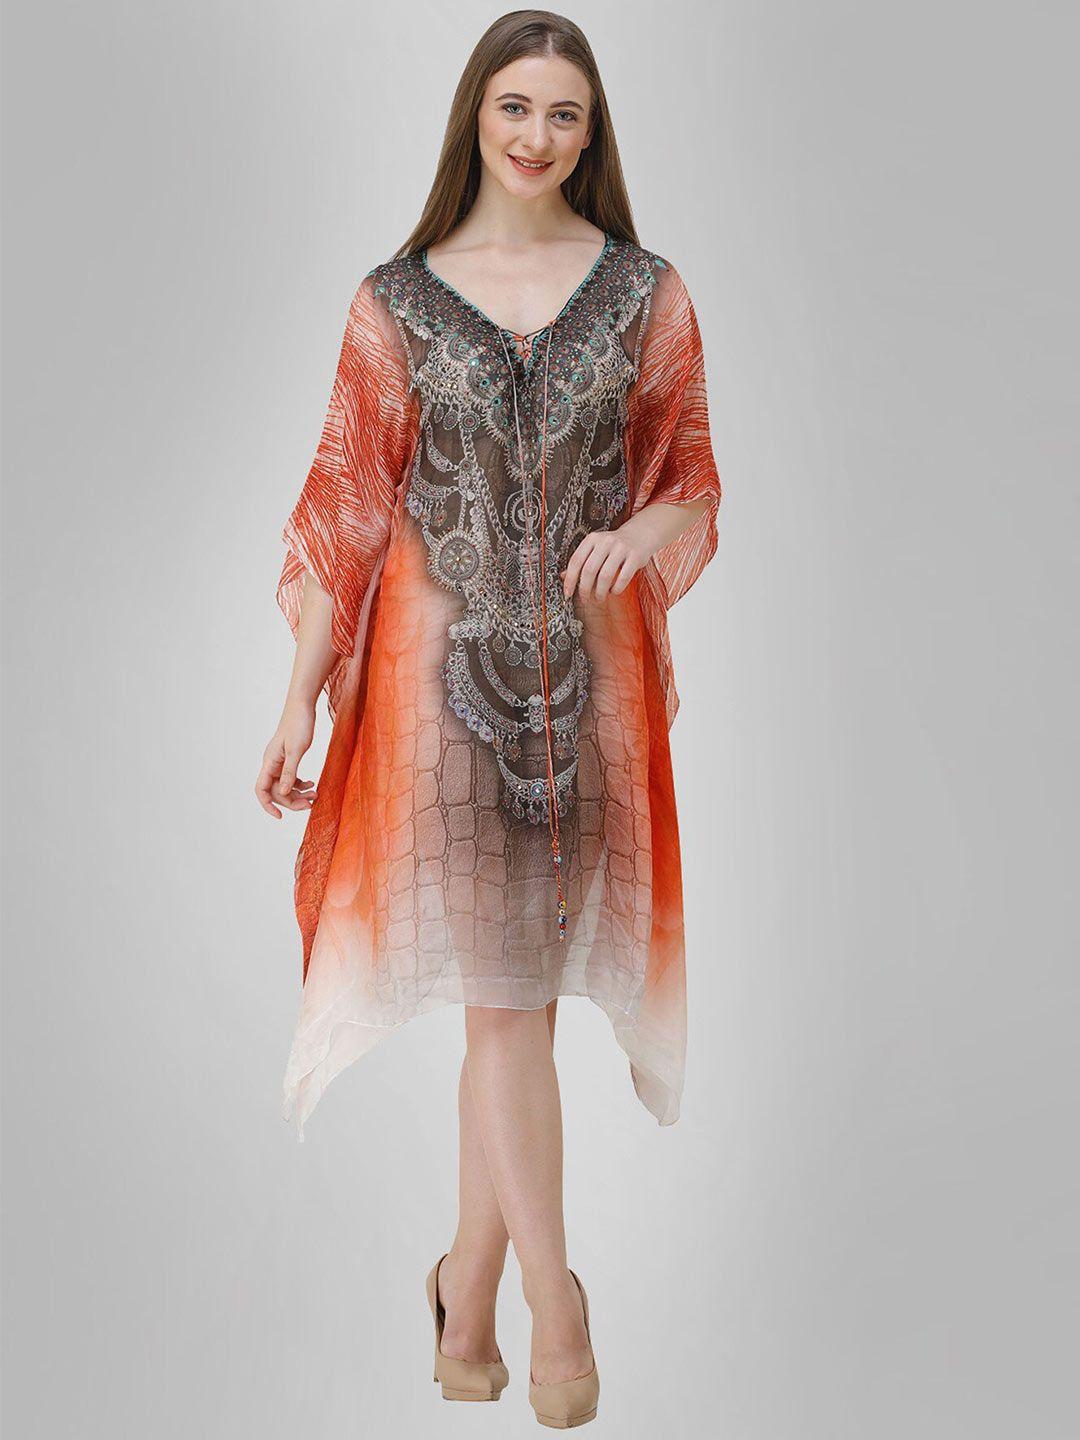 rajoria instyle orange & cream-coloured georgette ethnic kaftan dress